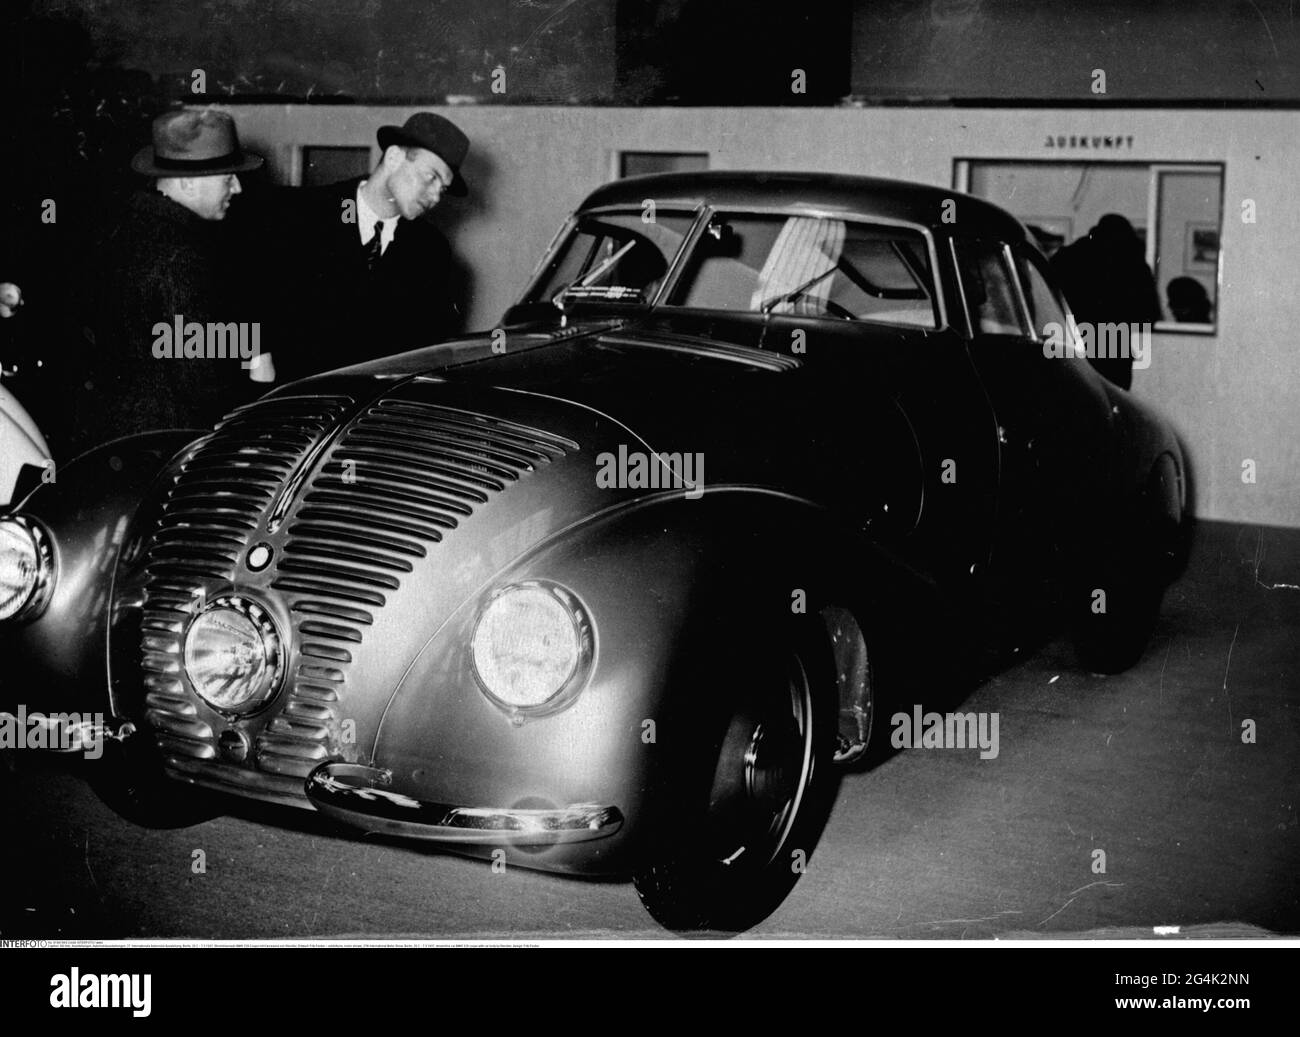 Exposiciones, ferias de automóviles, 27th International Motor Show, Berlín, 20,2. - 7,3.1937, USO EDITORIAL SOLAMENTE Foto de stock